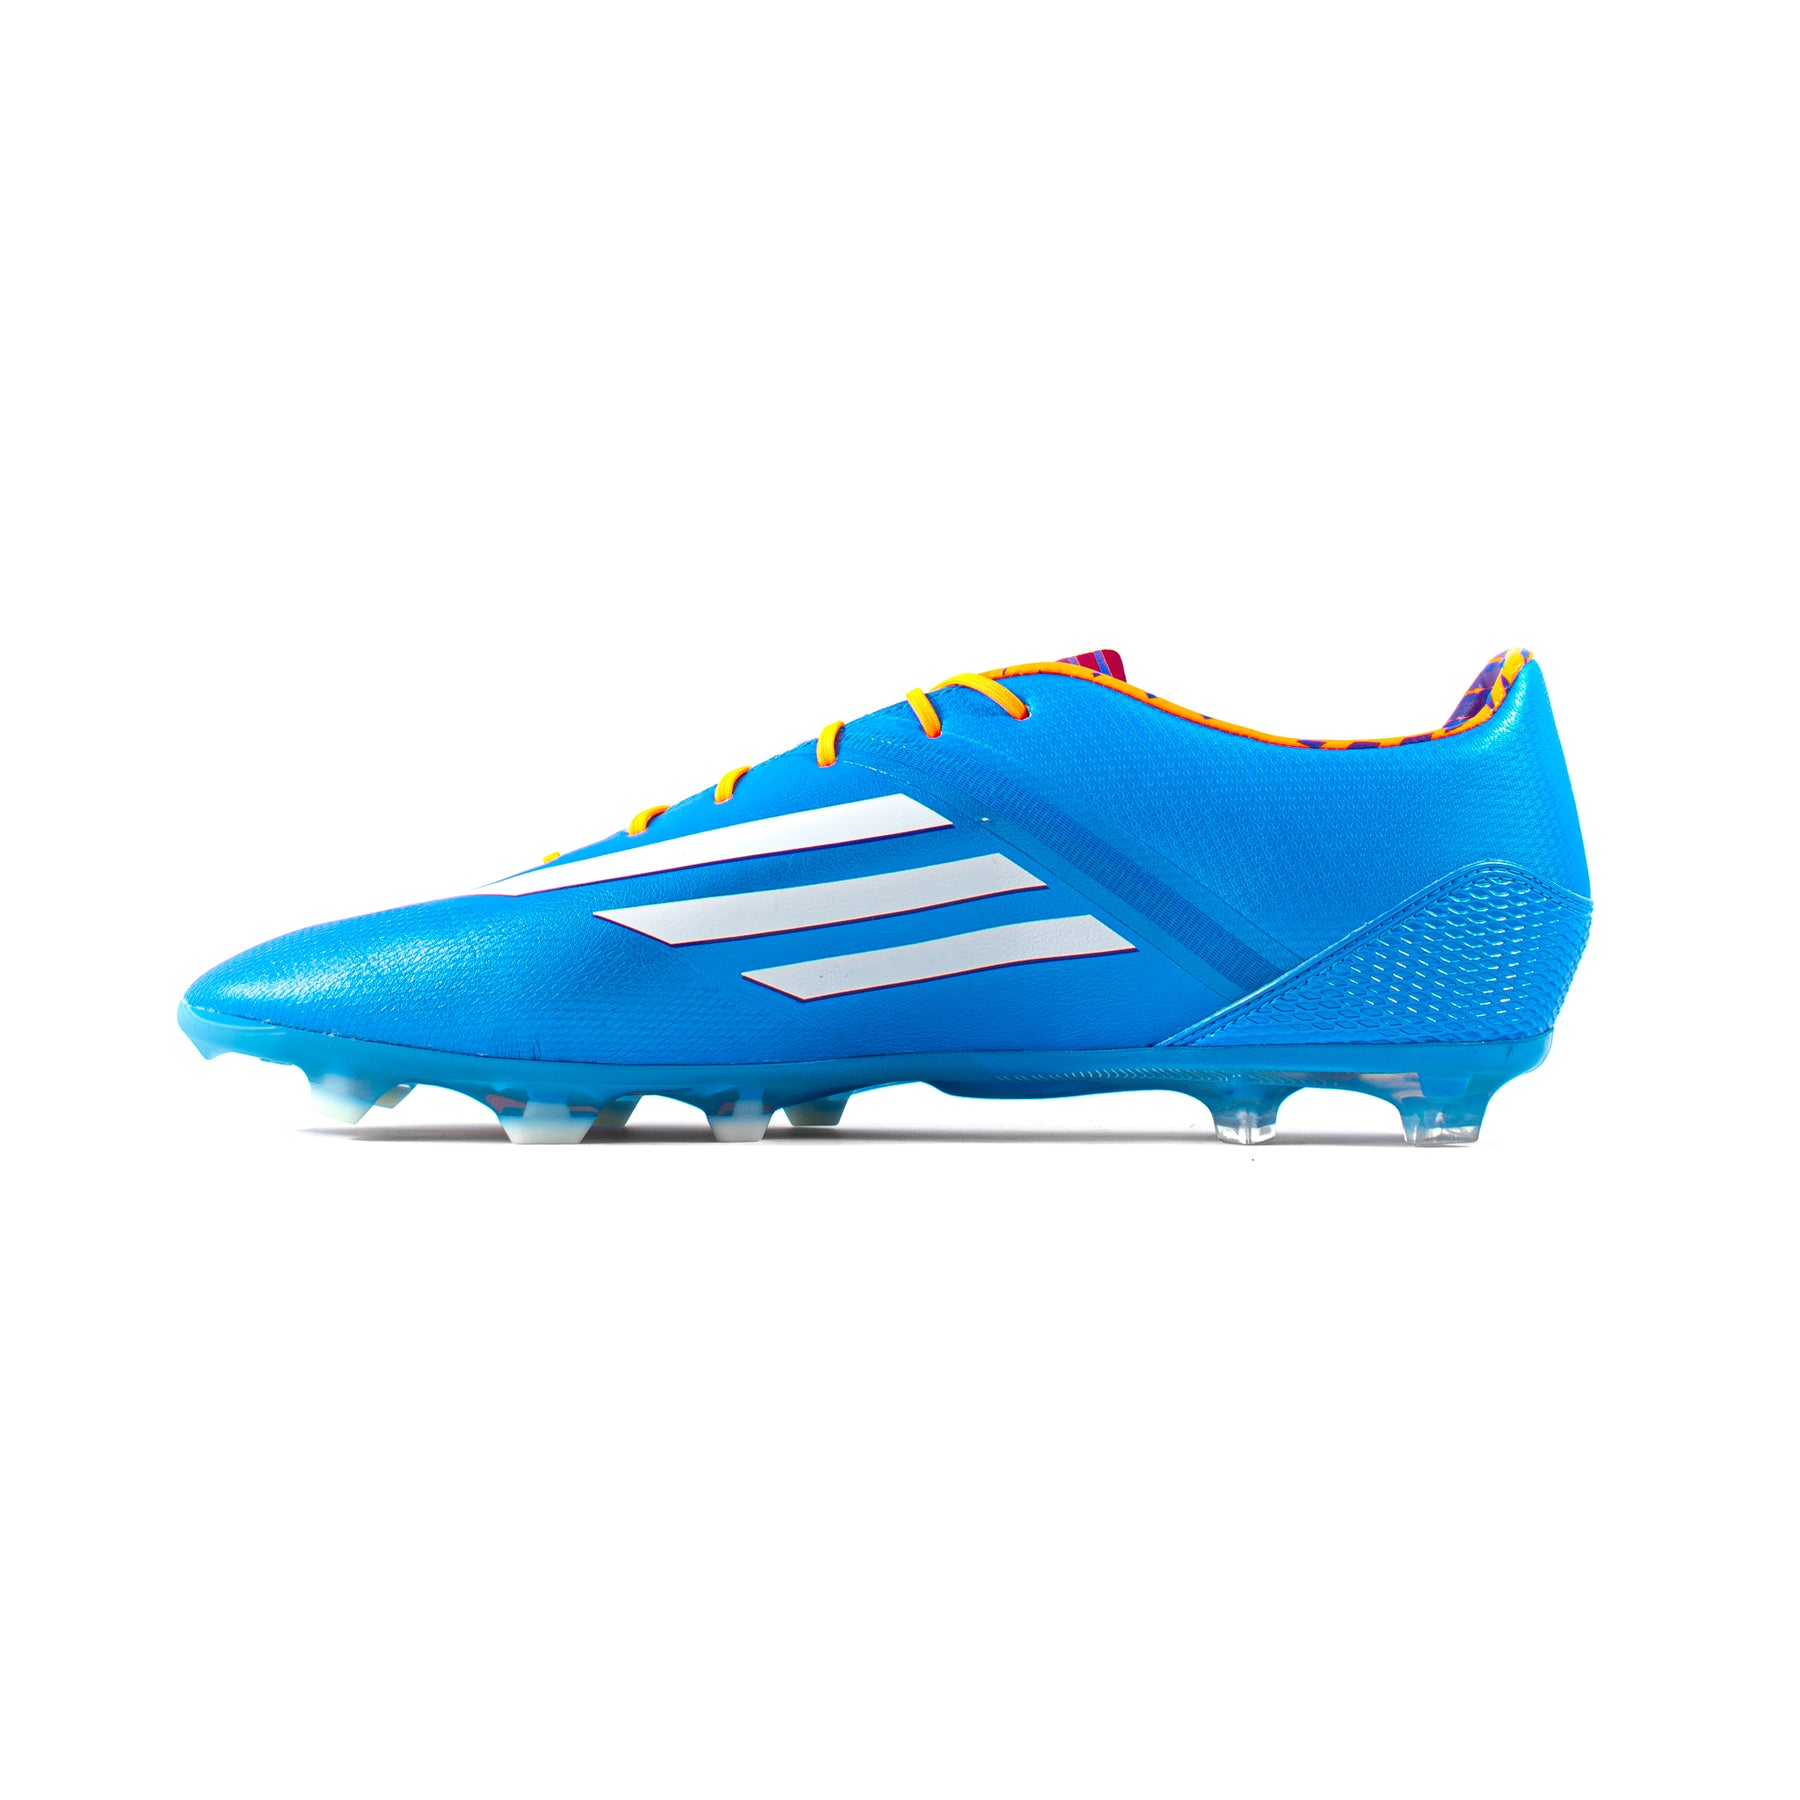 Adidas F30 Adizero Samba Blue FG – Soccer Cleats